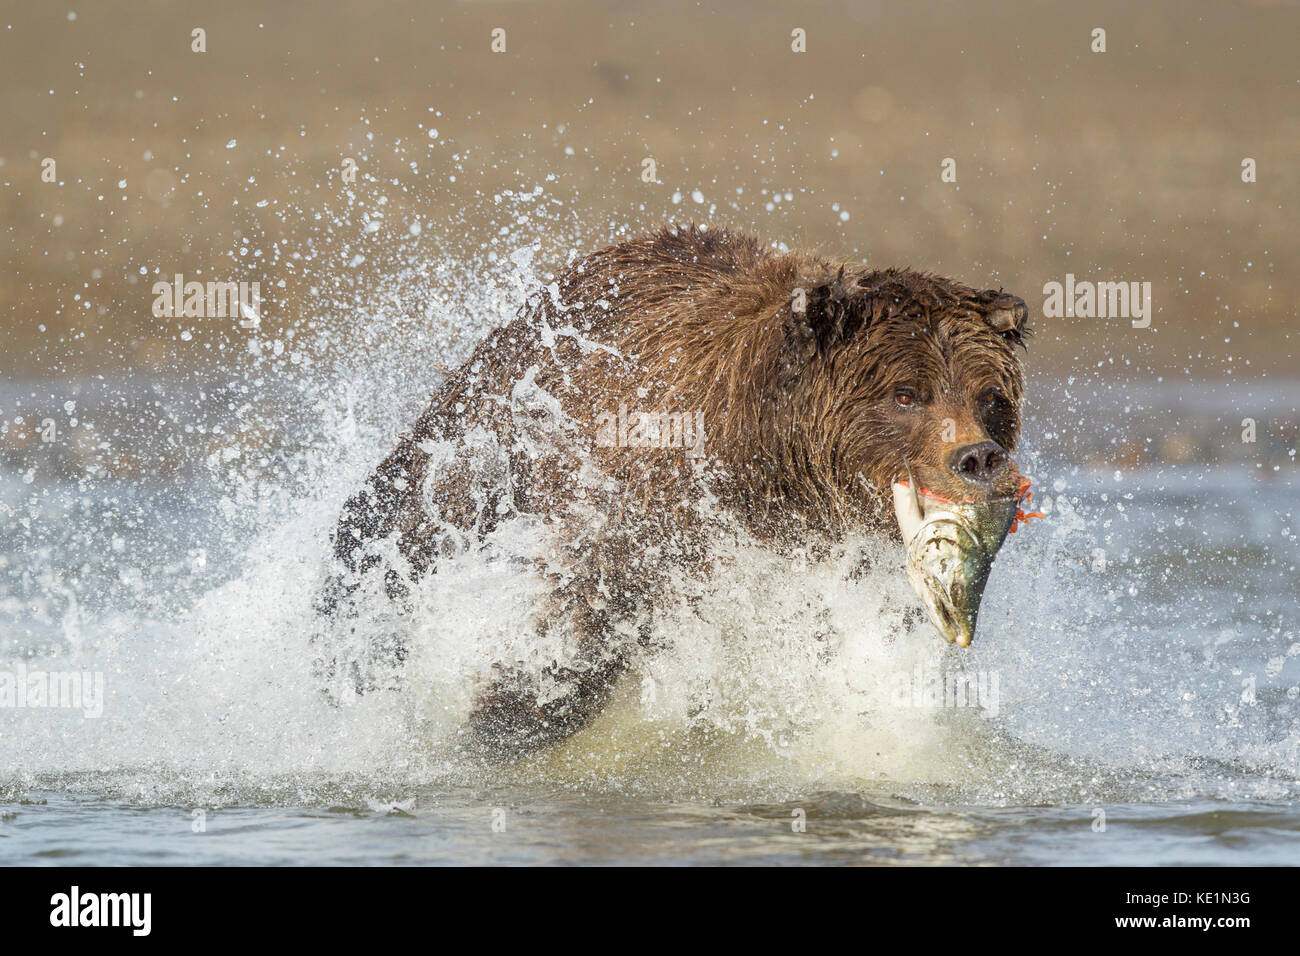 Alaskan brown bear chasing salmon in Alaska Stock Photo